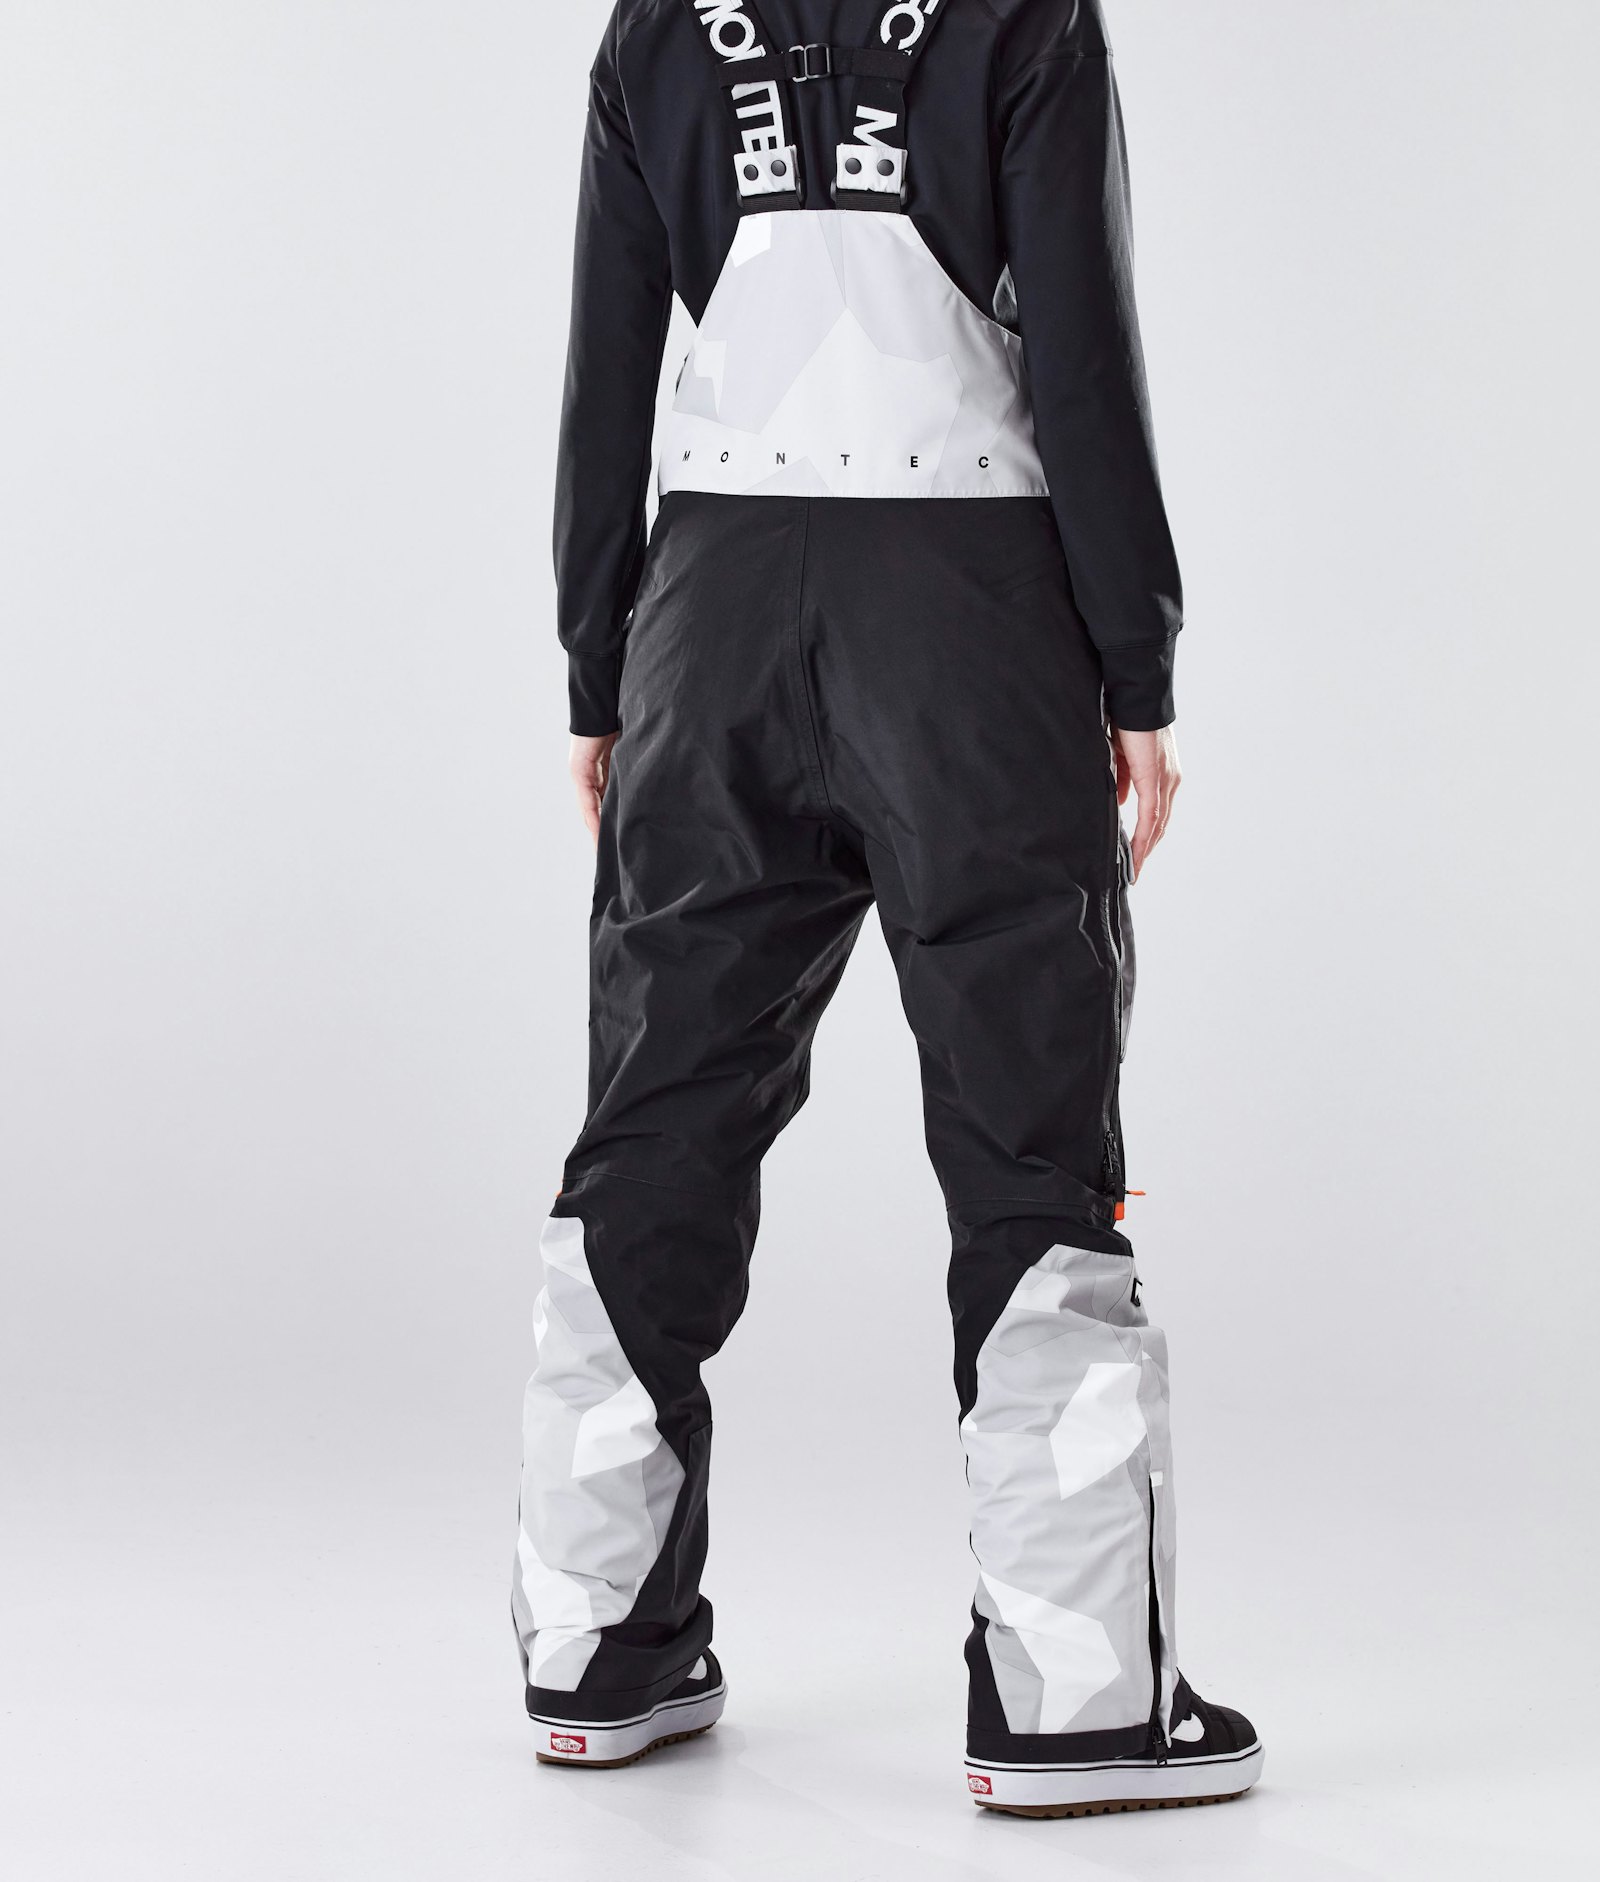 Montec Fawk W 2020 Snowboard Pants Women Snow Camo/Black